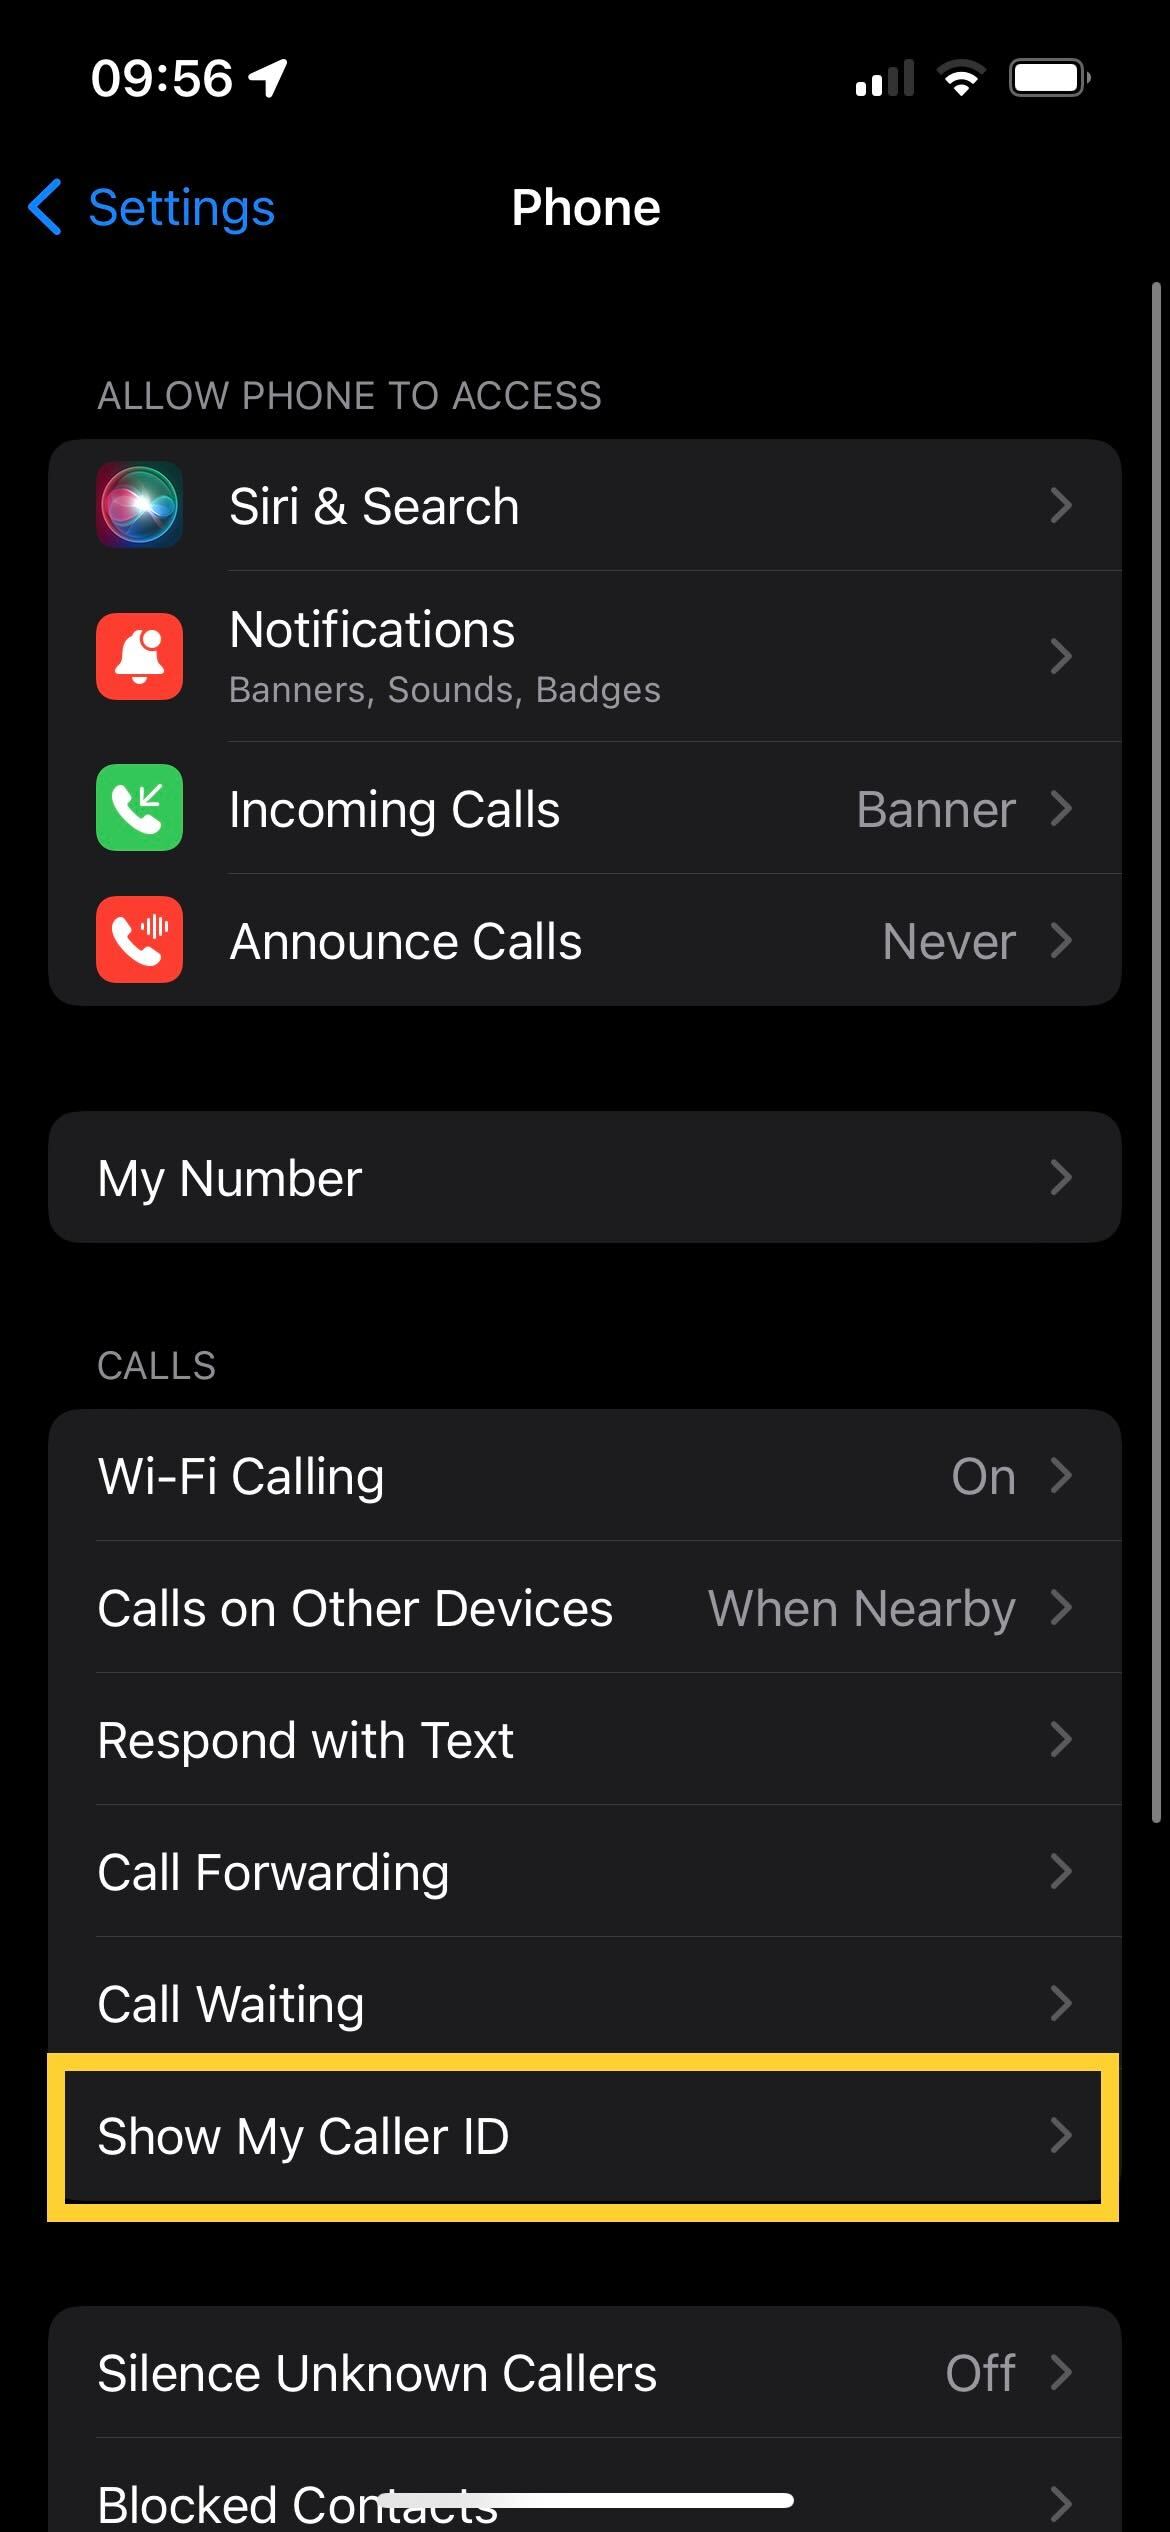 The Show Caller ID button in iOS